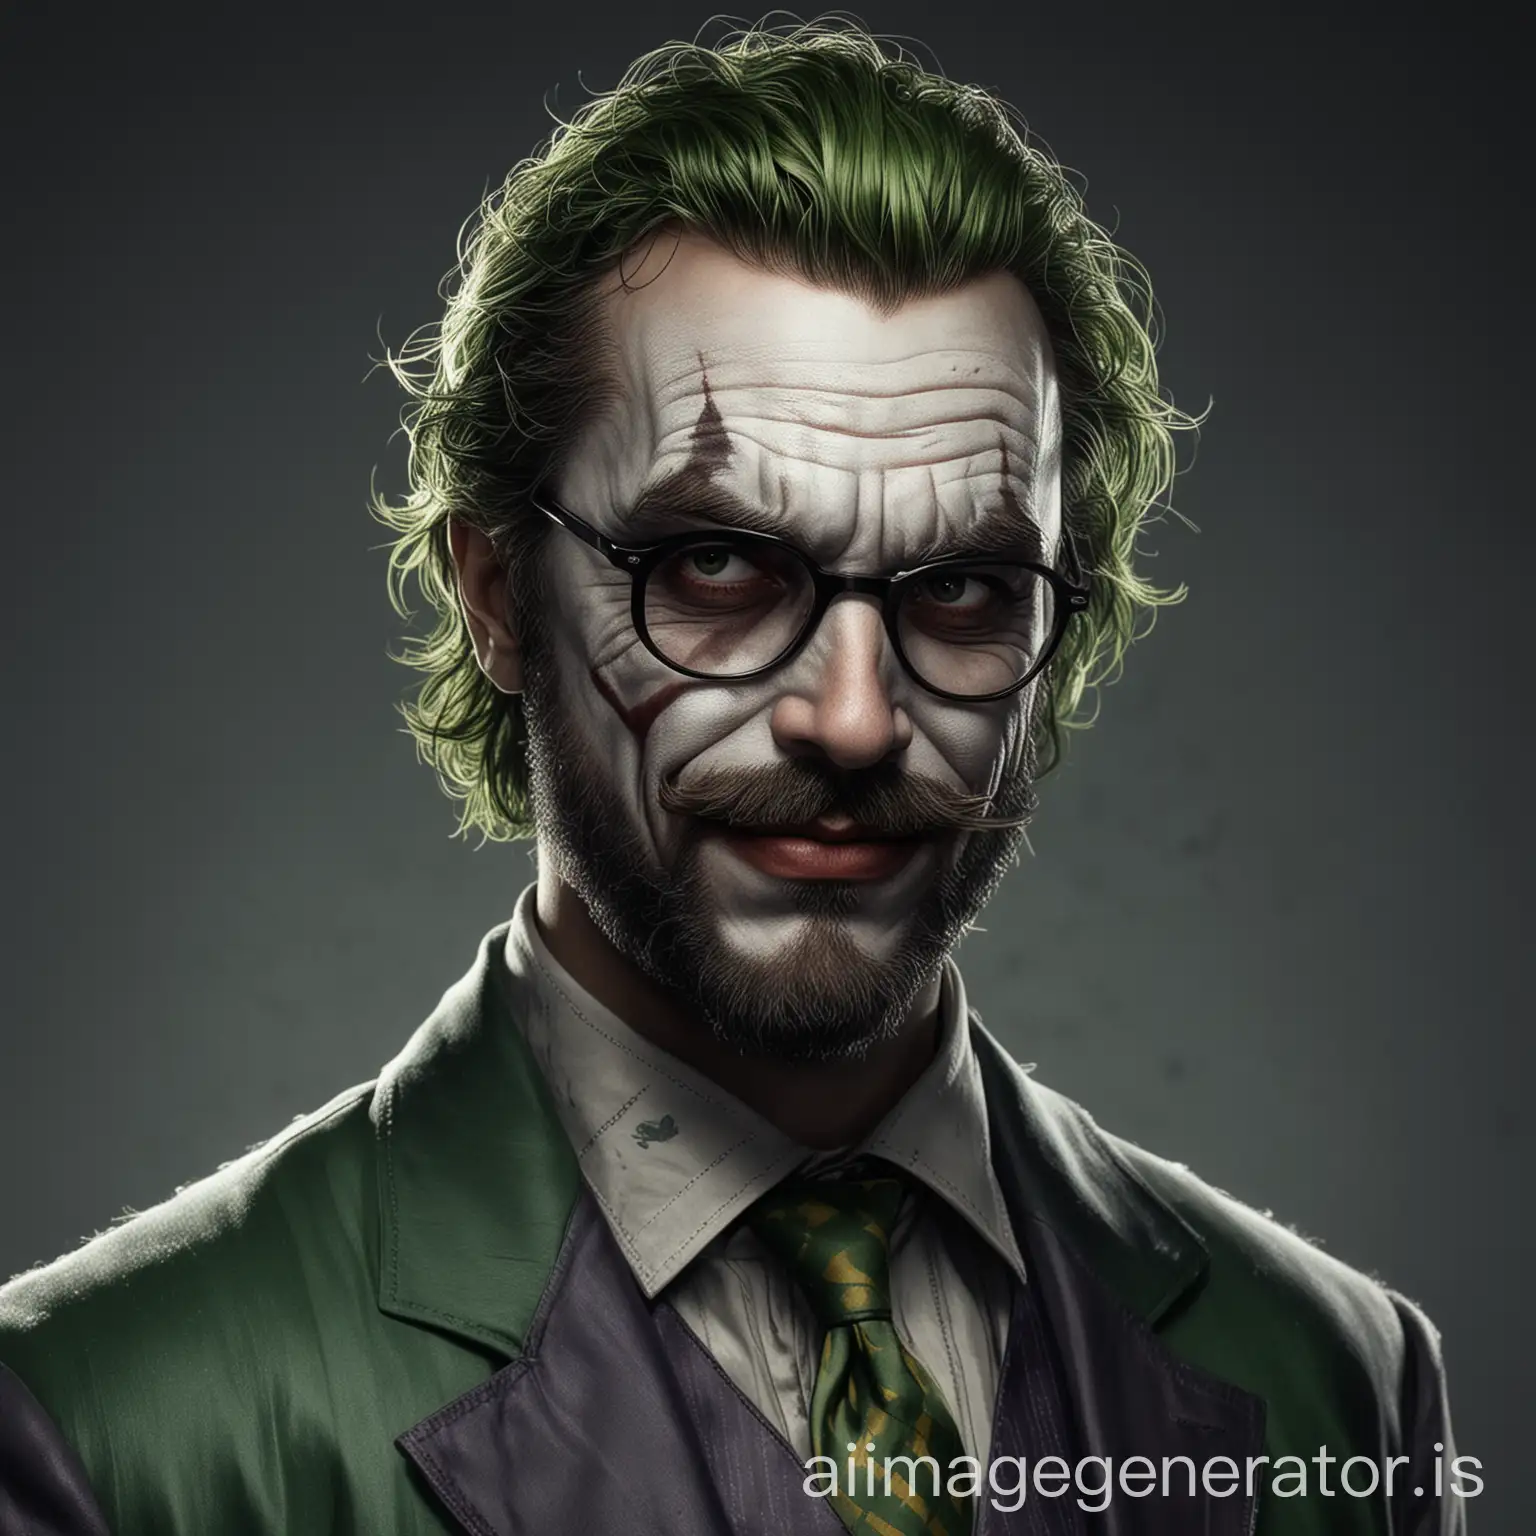 The Joker with full Beard and mustache, Gangster, DC comics, short hair, square glasses, full body, round face